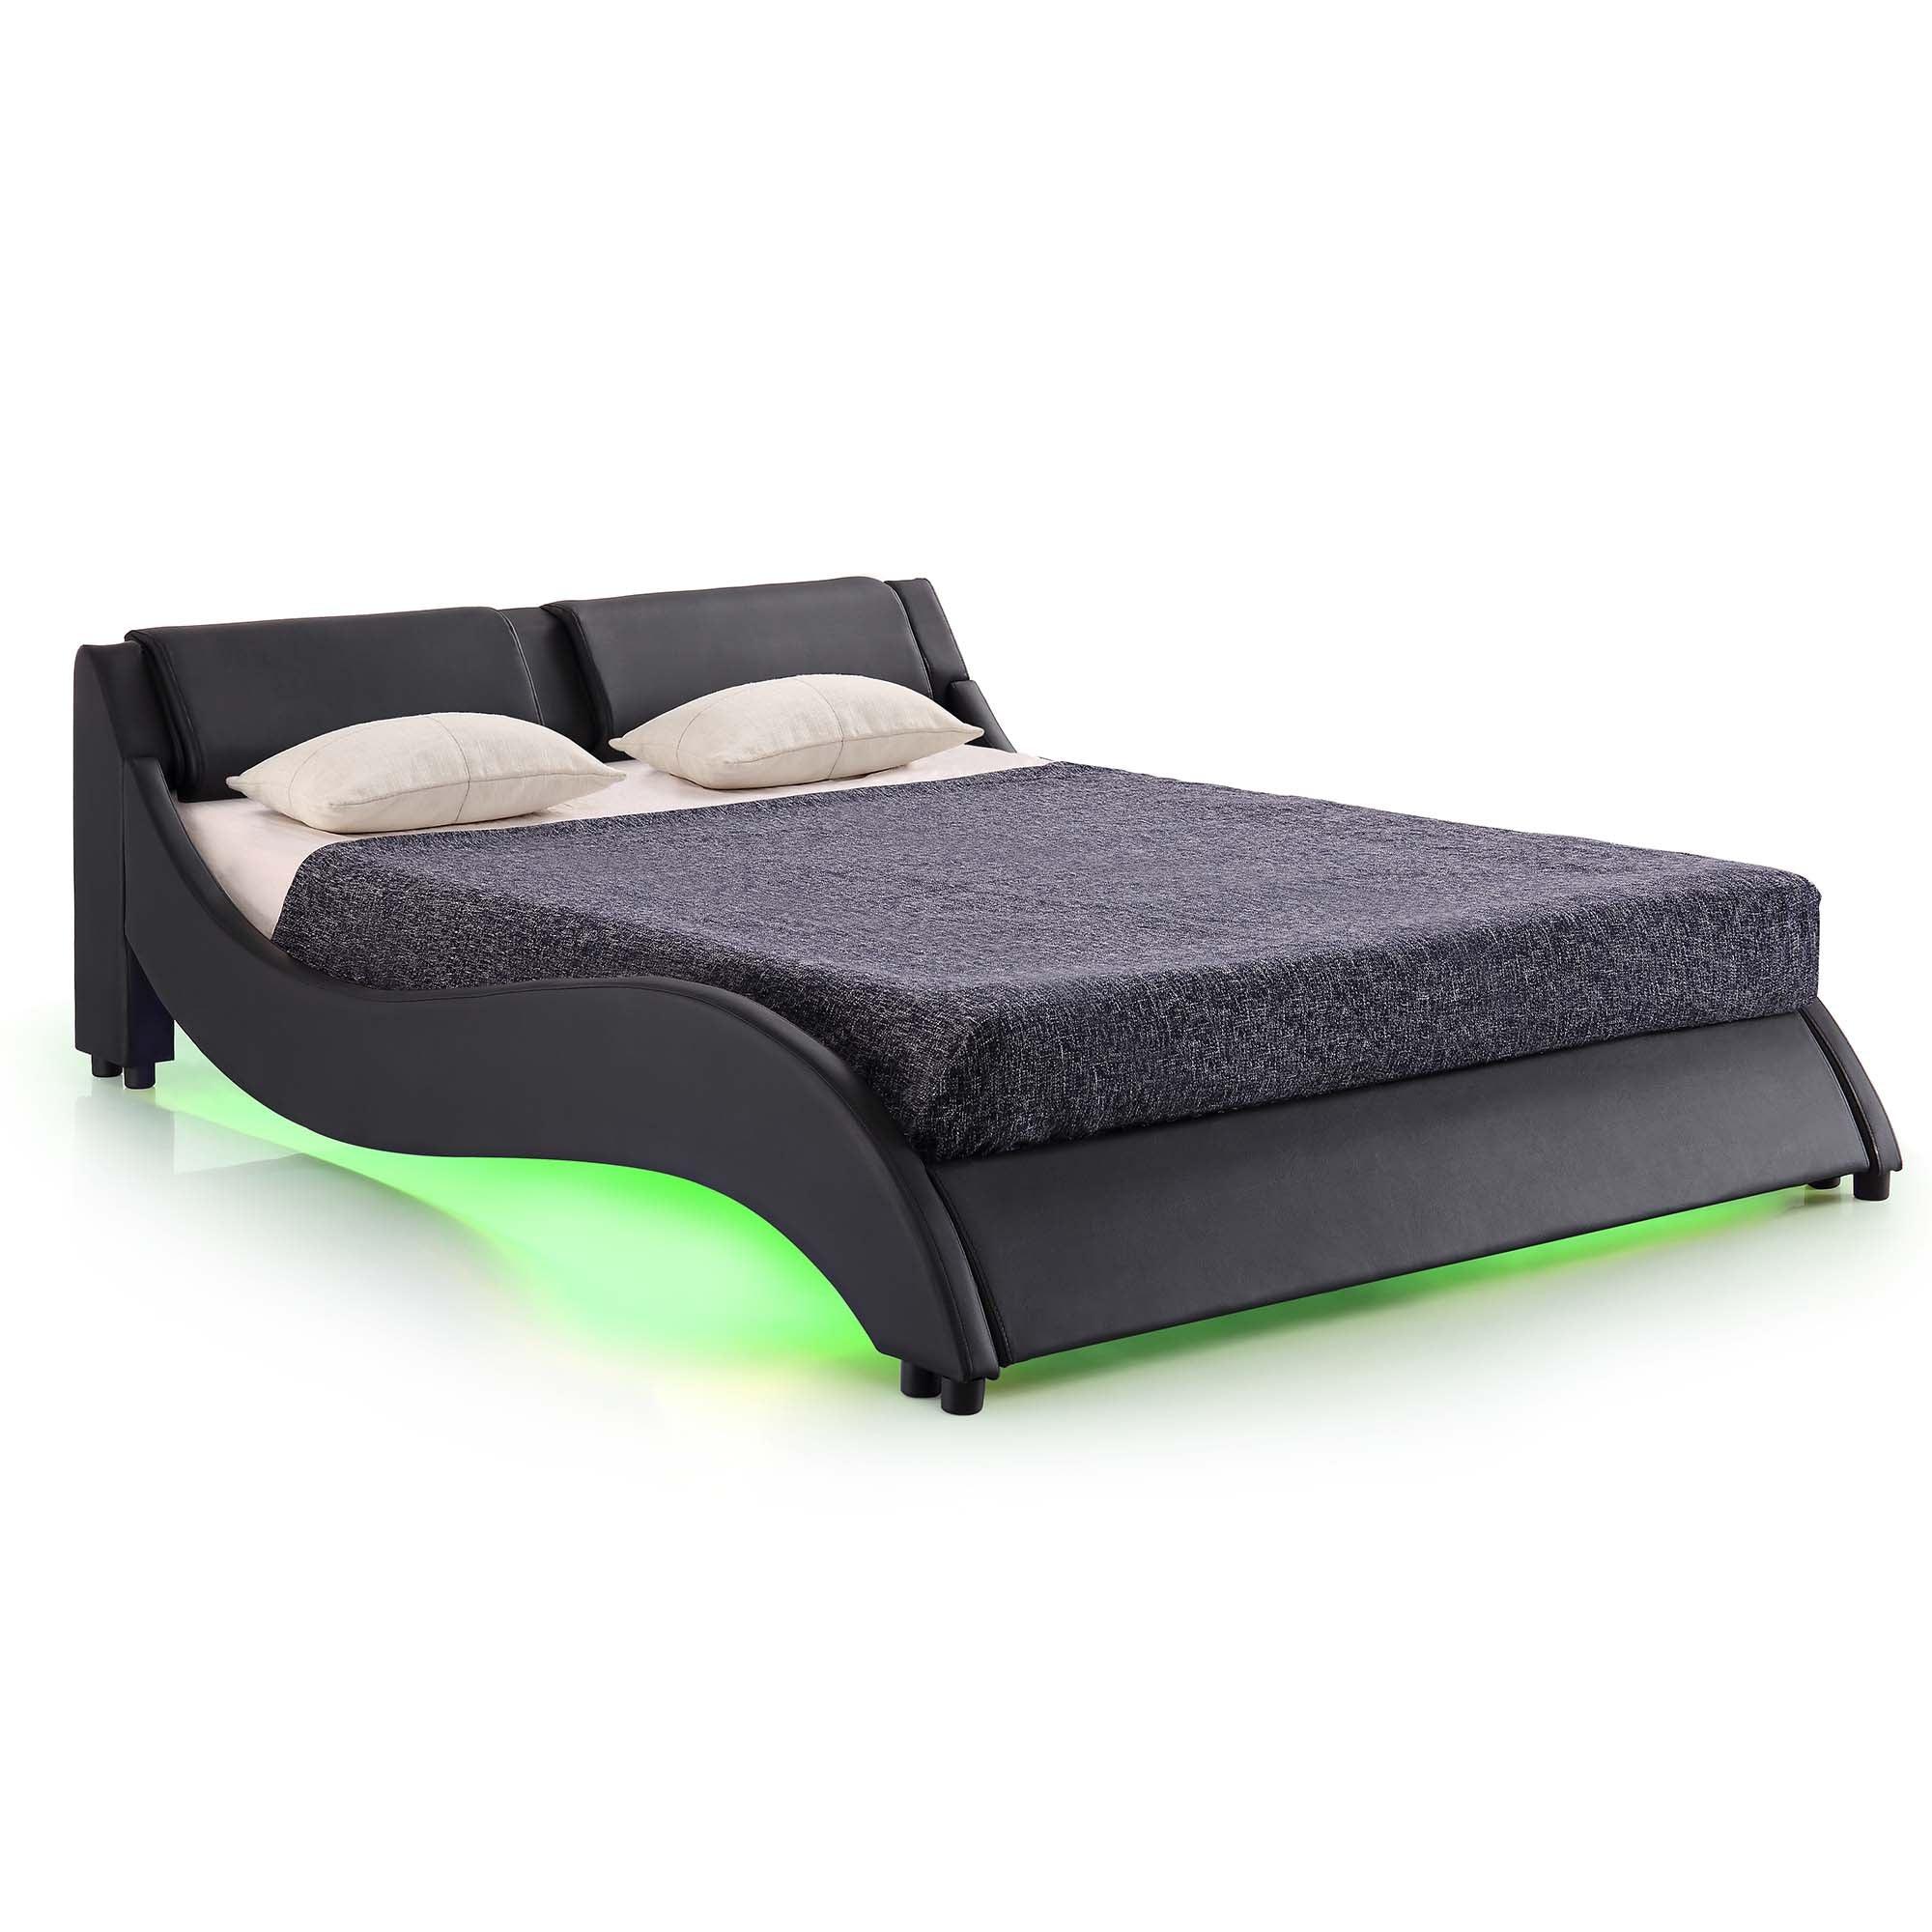 CORVUS Faux Leather Upholstered Bed Frame with Underbed LED Lights, Black